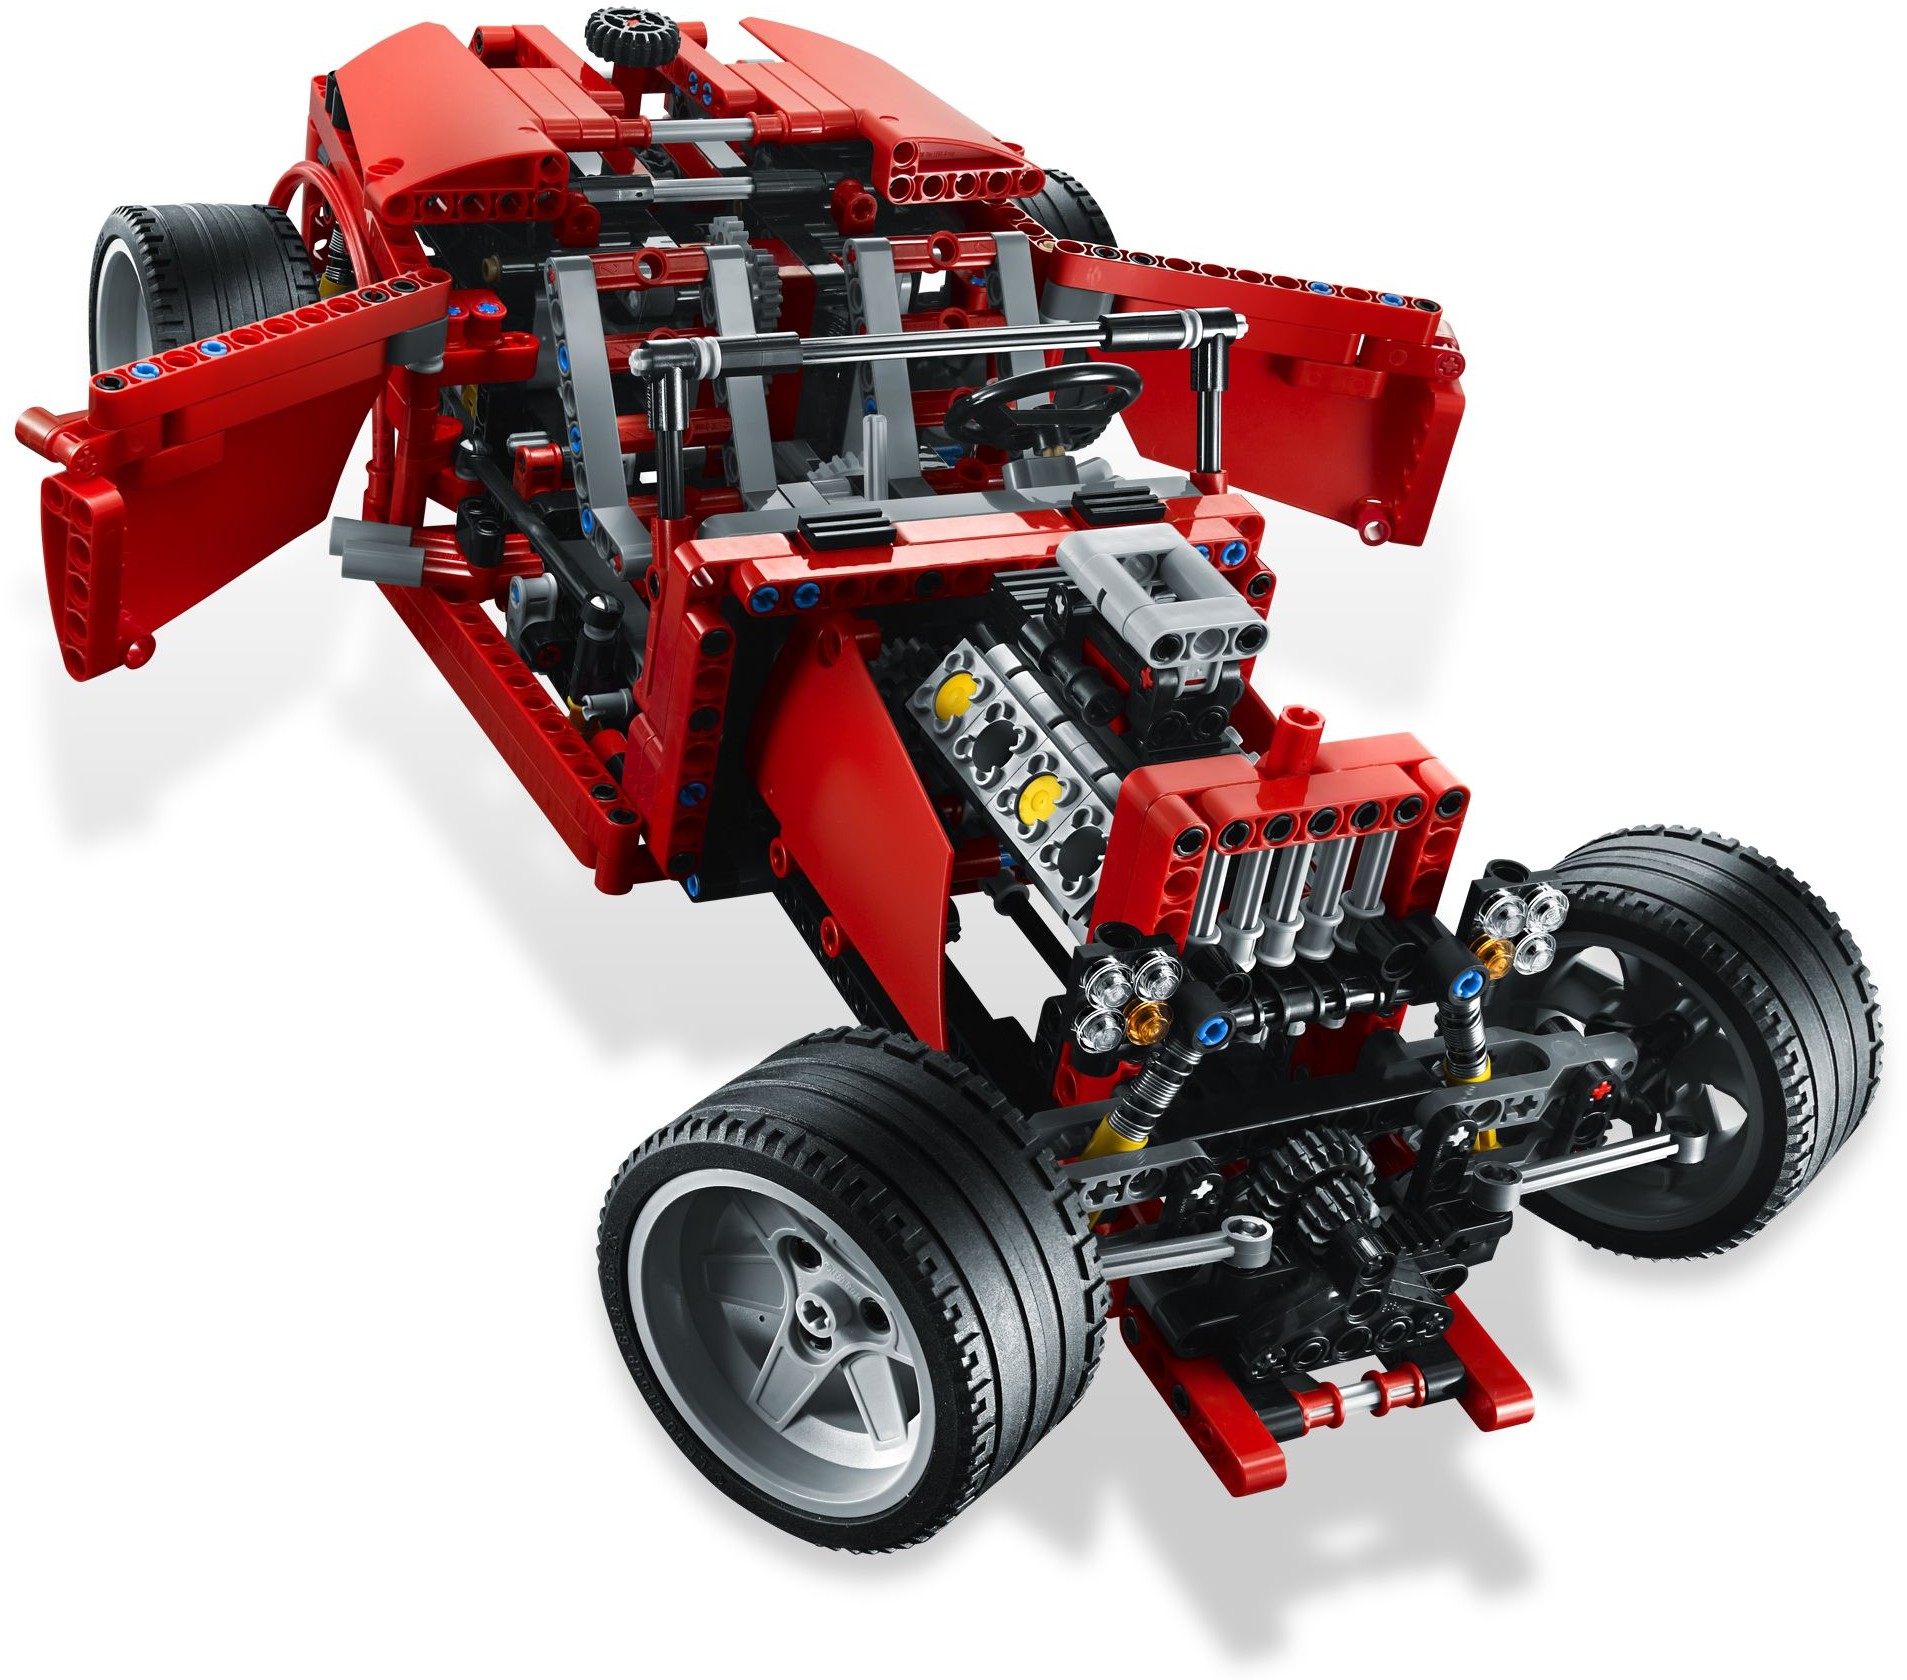 lego-8070-super-car-lego-technic-set-for-sale-best-price